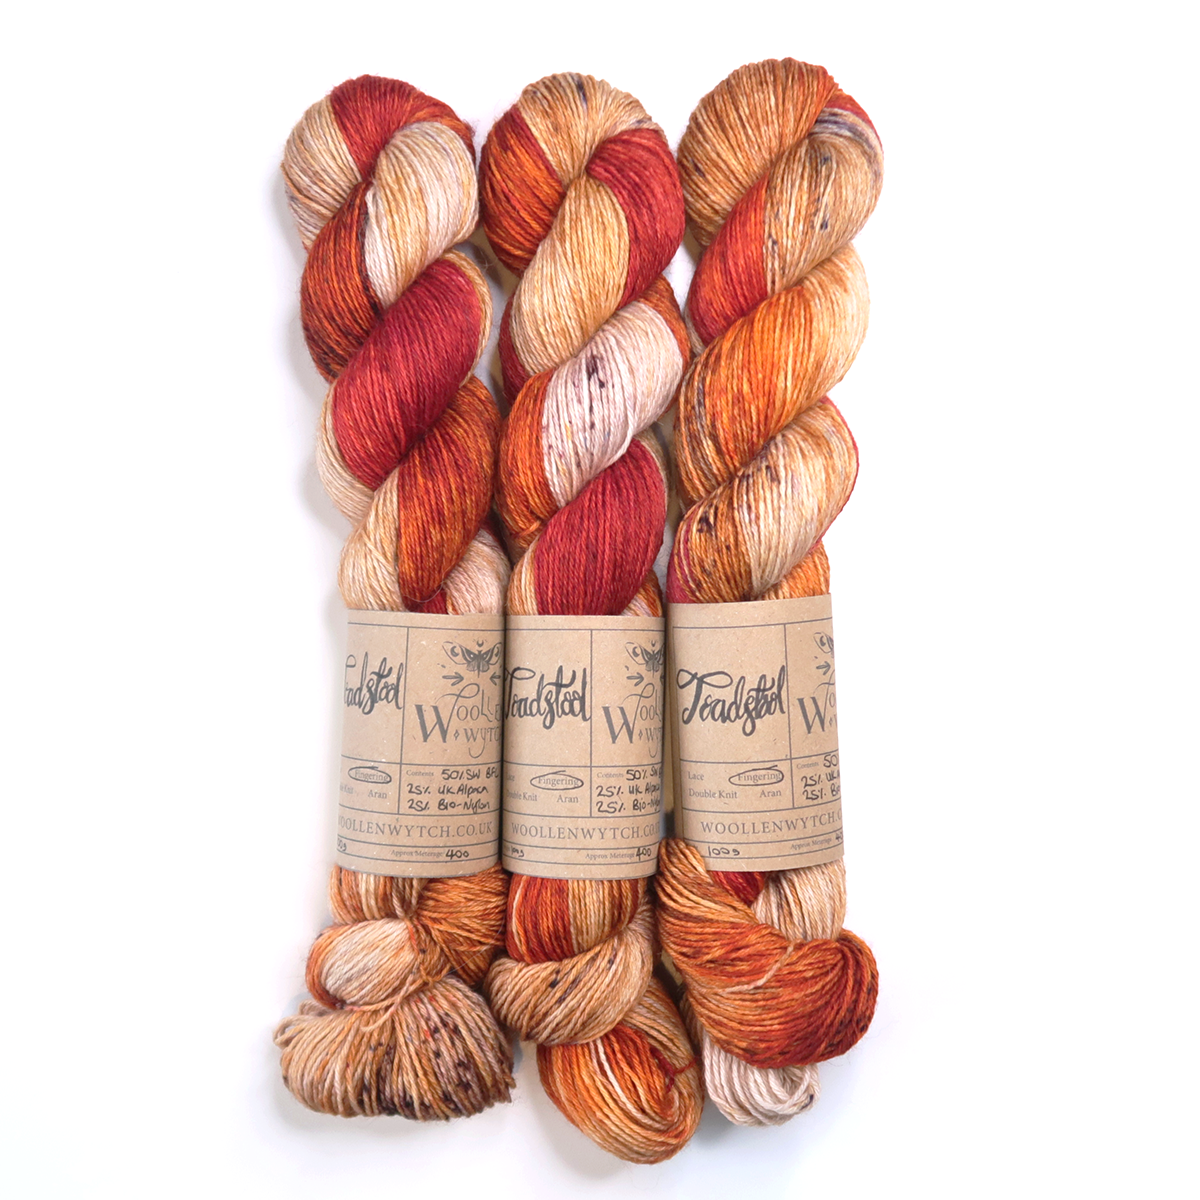 Toadstool hand dyed red and brown british yarn bfl woollen wytch bristol uk